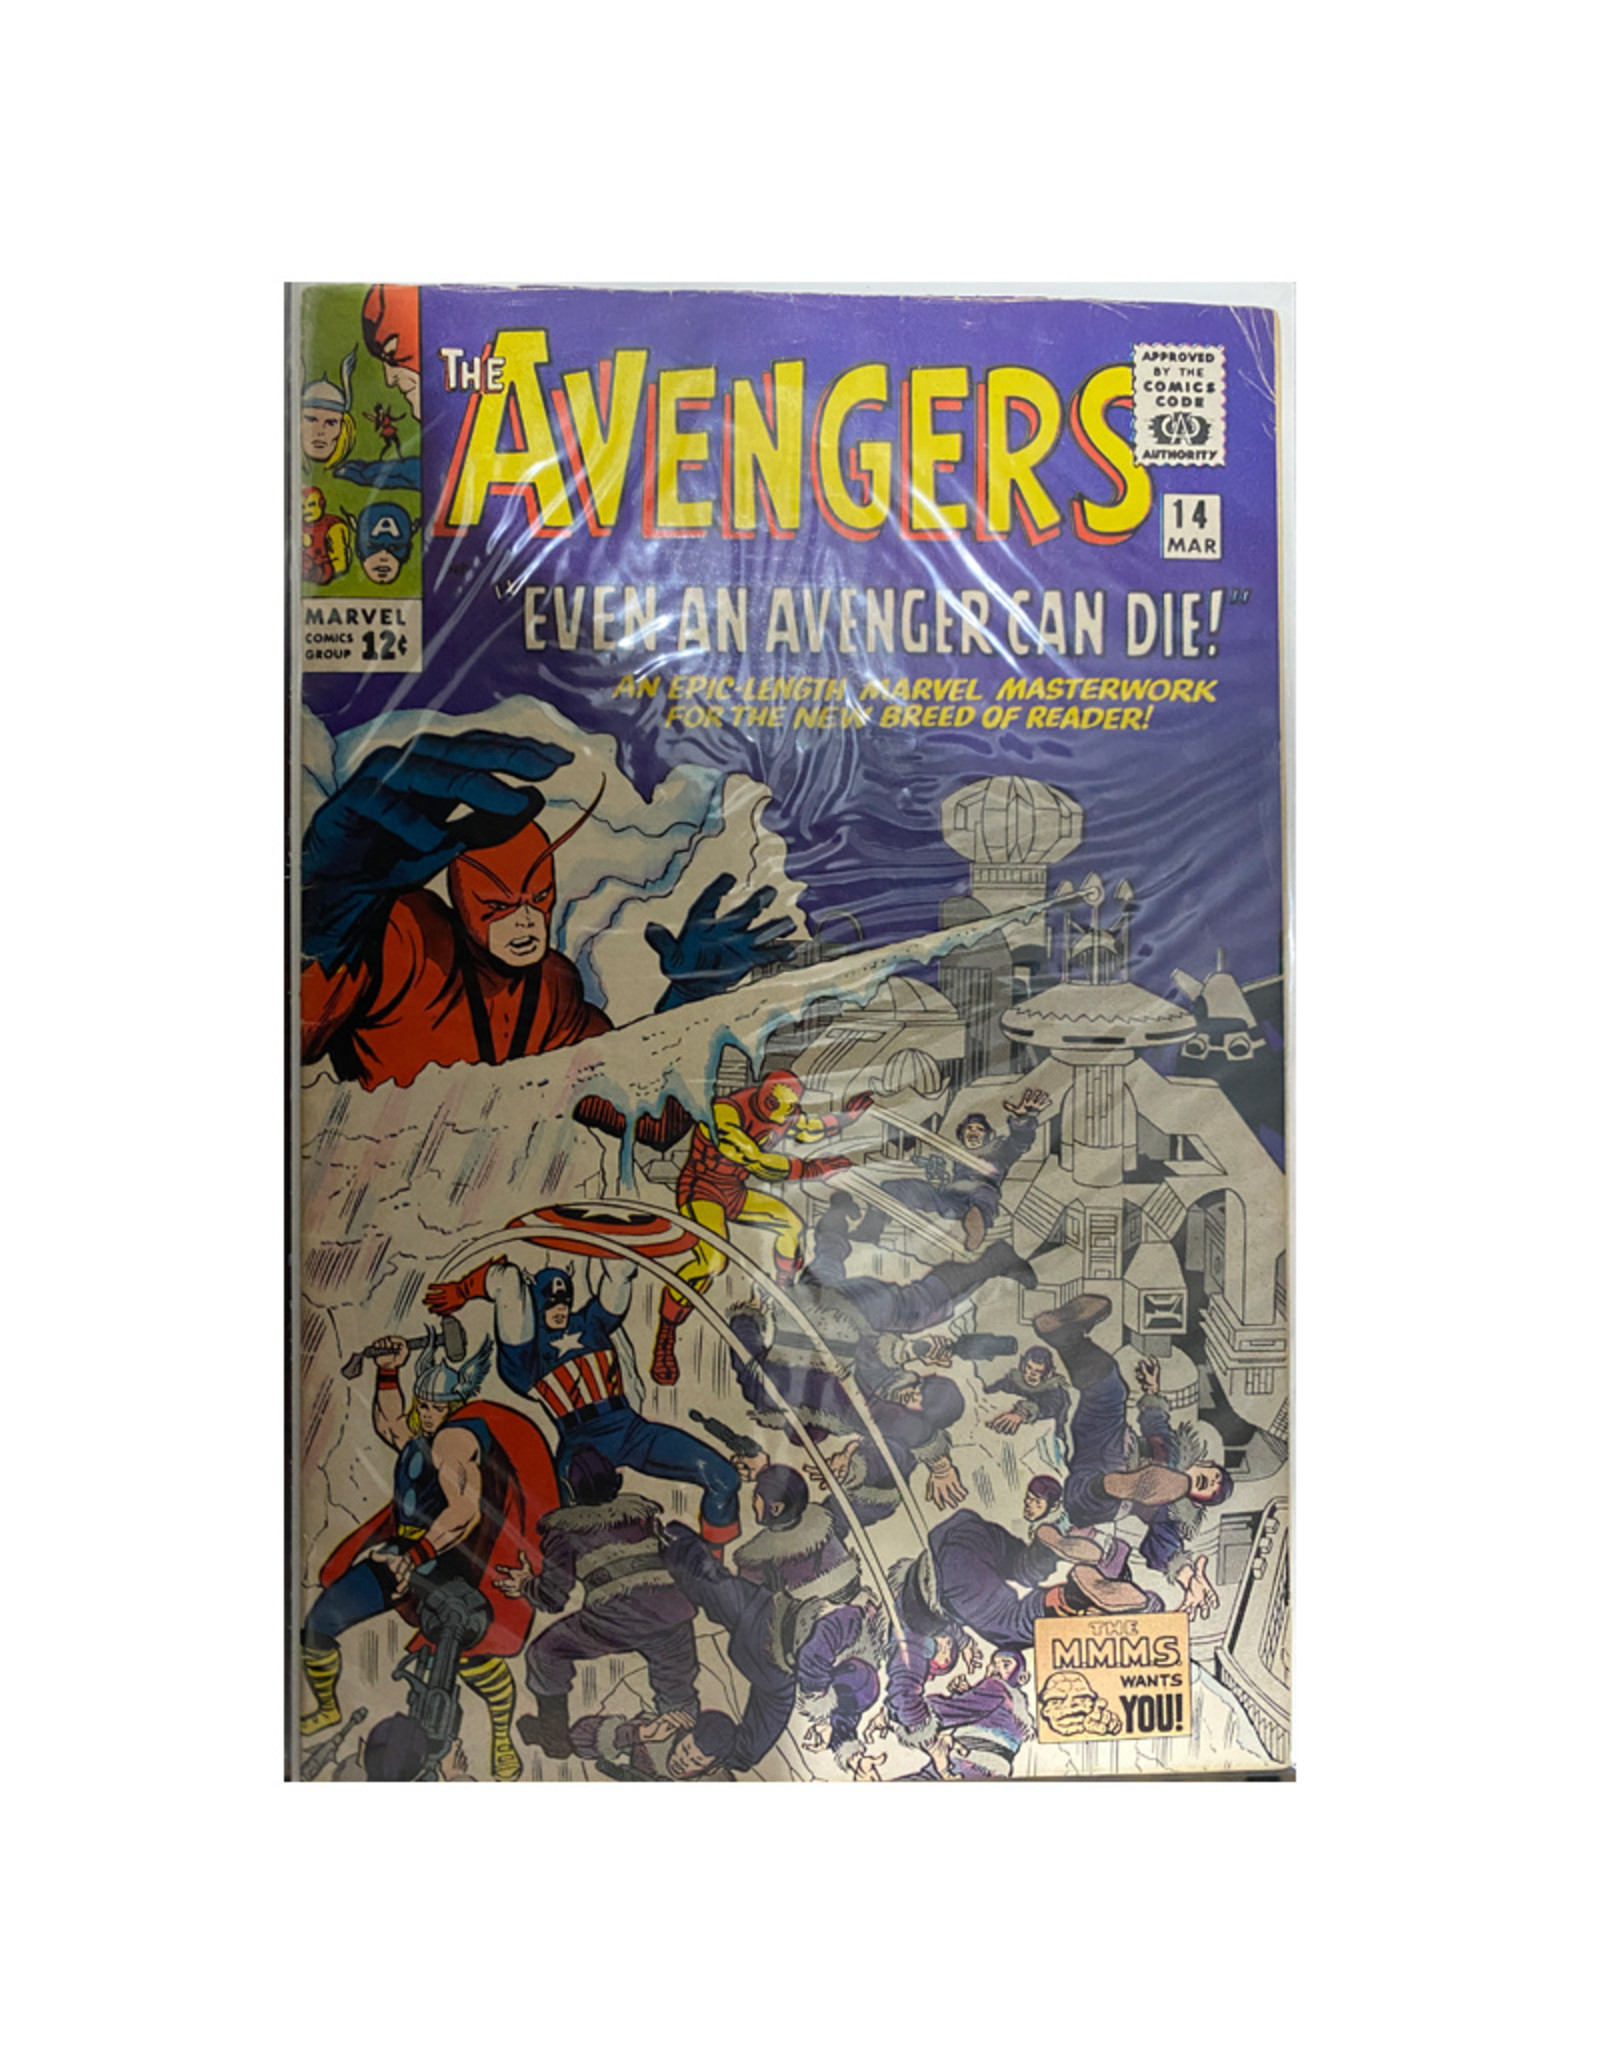 Marvel Comics The Avengers #14